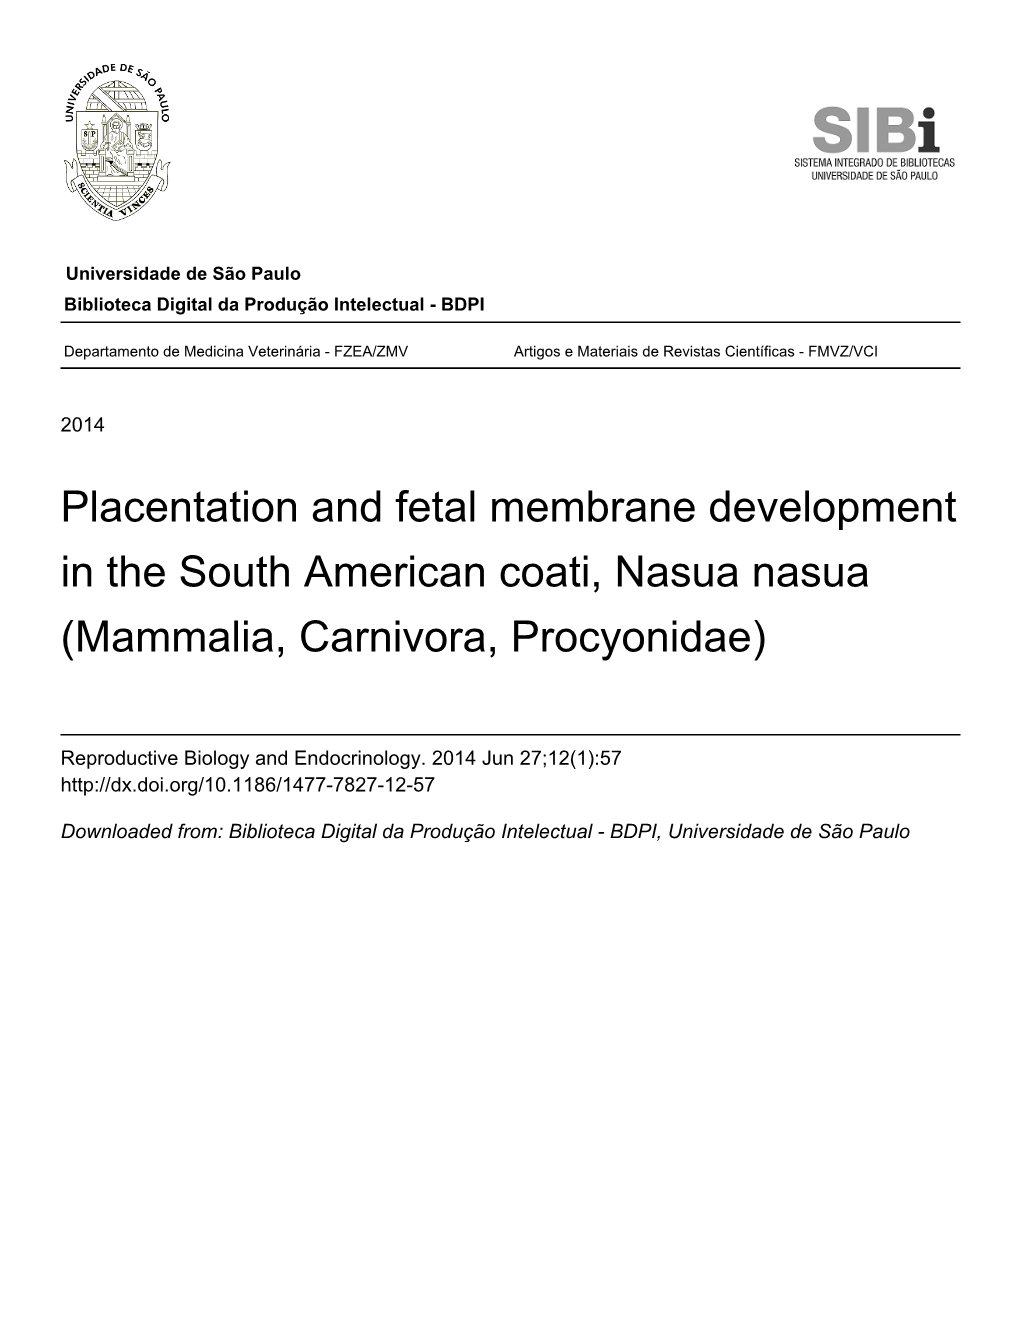 Placentation and Fetal Membrane Development in the South American Coati, Nasua Nasua (Mammalia, Carnivora, Procyonidae)